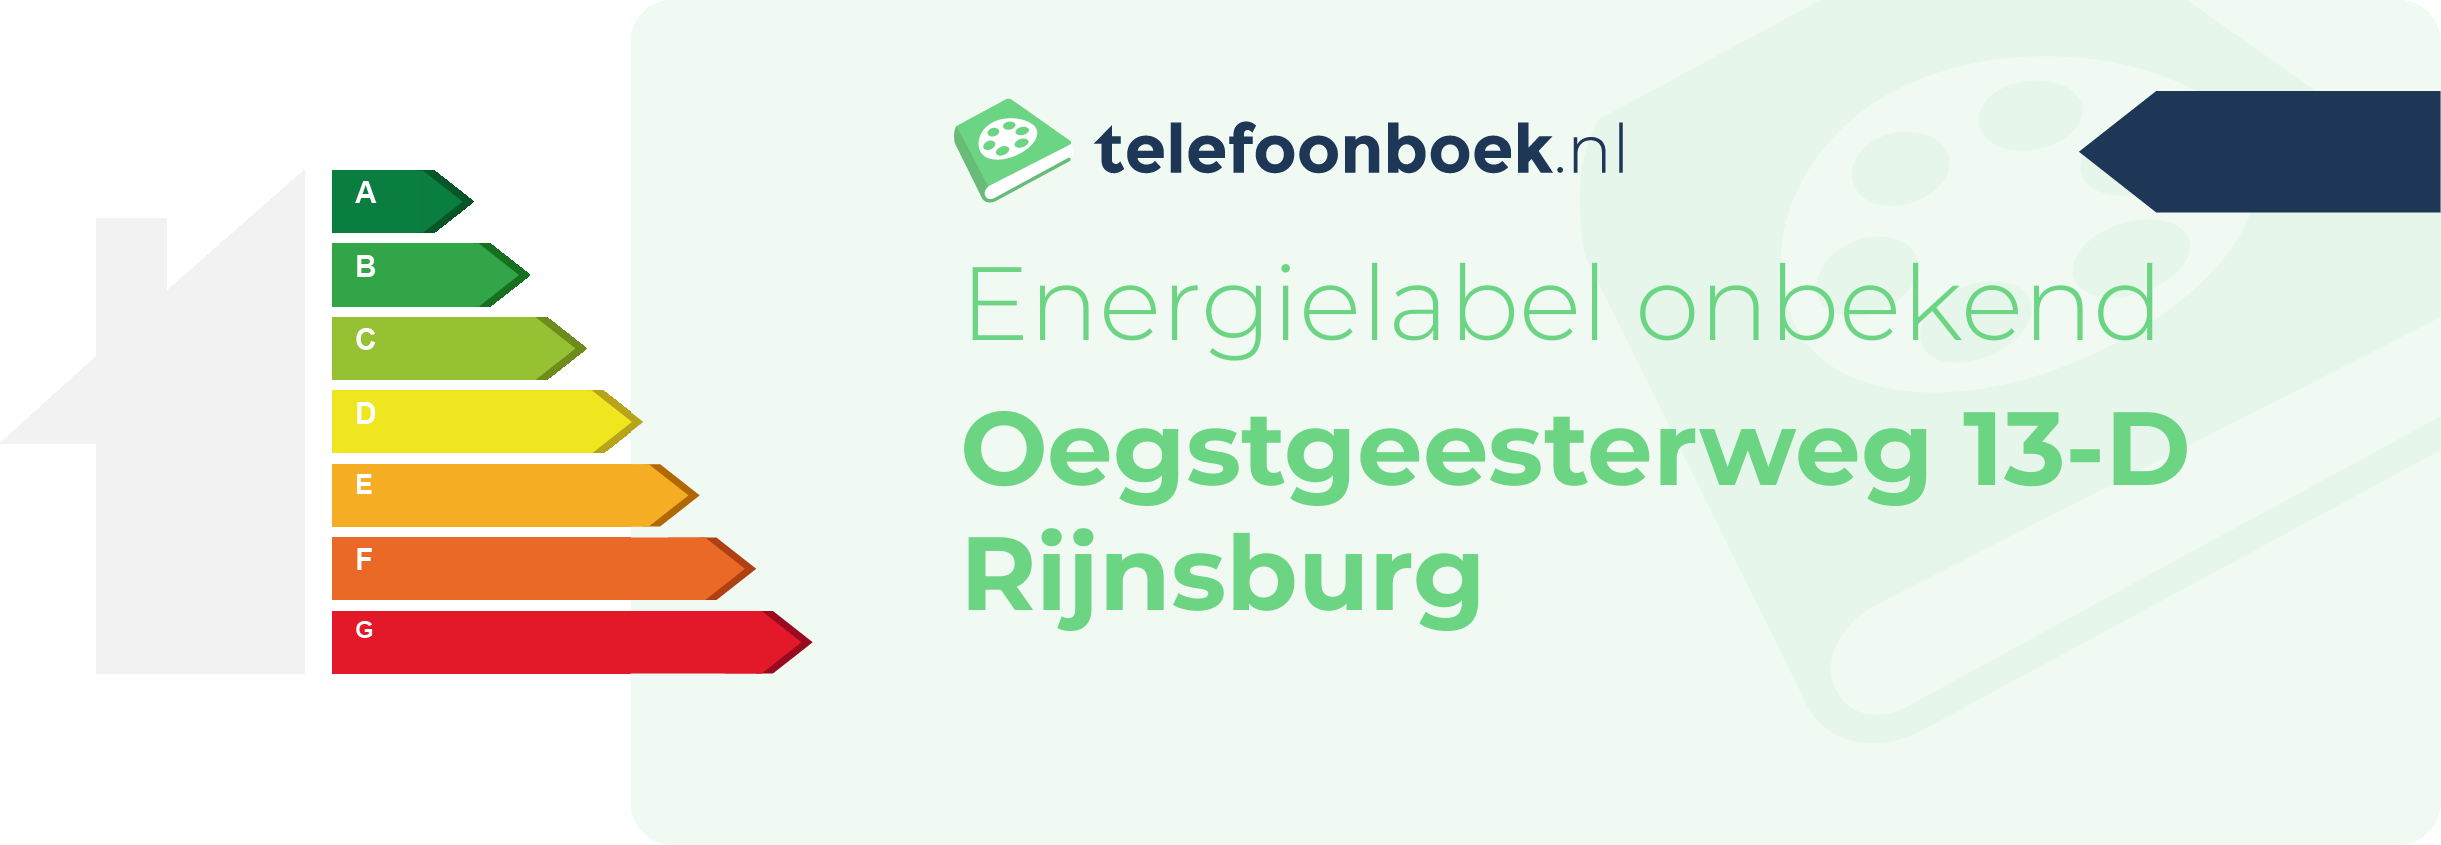 Energielabel Oegstgeesterweg 13-D Rijnsburg